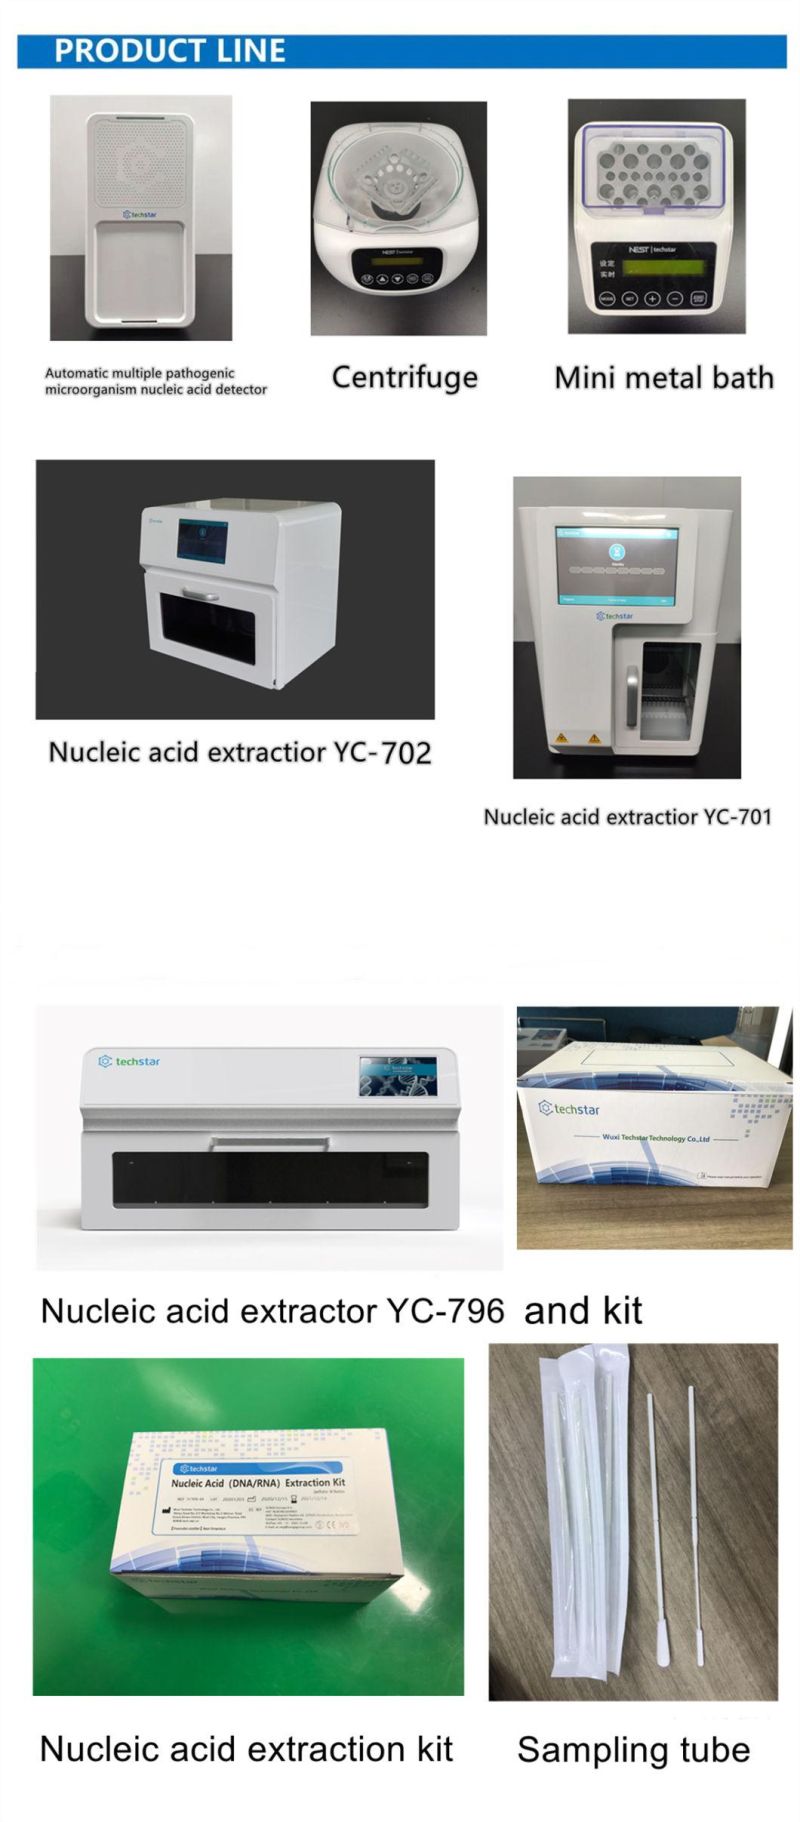 Techstar Sample Collection Tubes, Disposable Virus Sampling Swab Kit, CE, ISO Certified